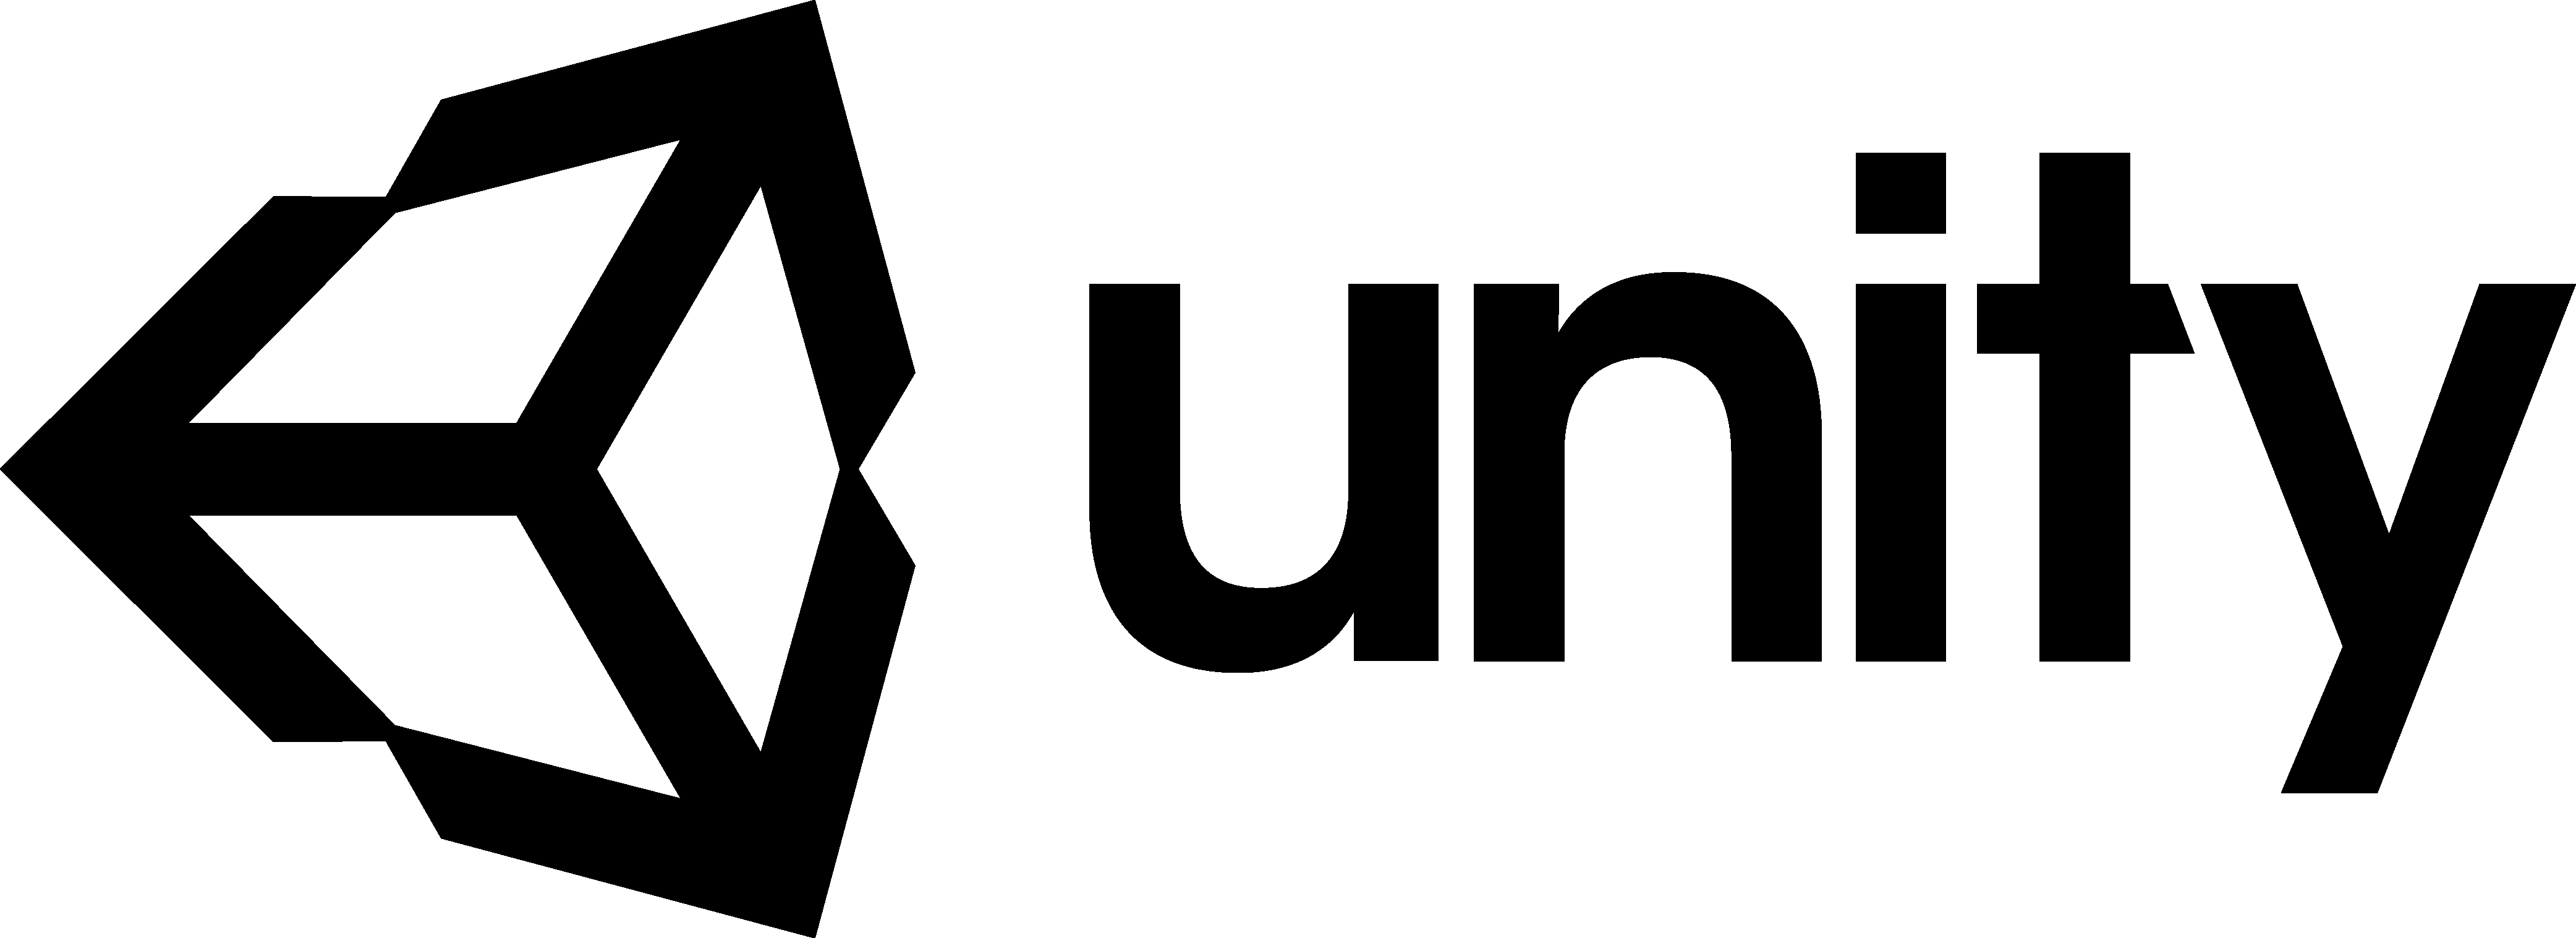 Unity logo image for game development